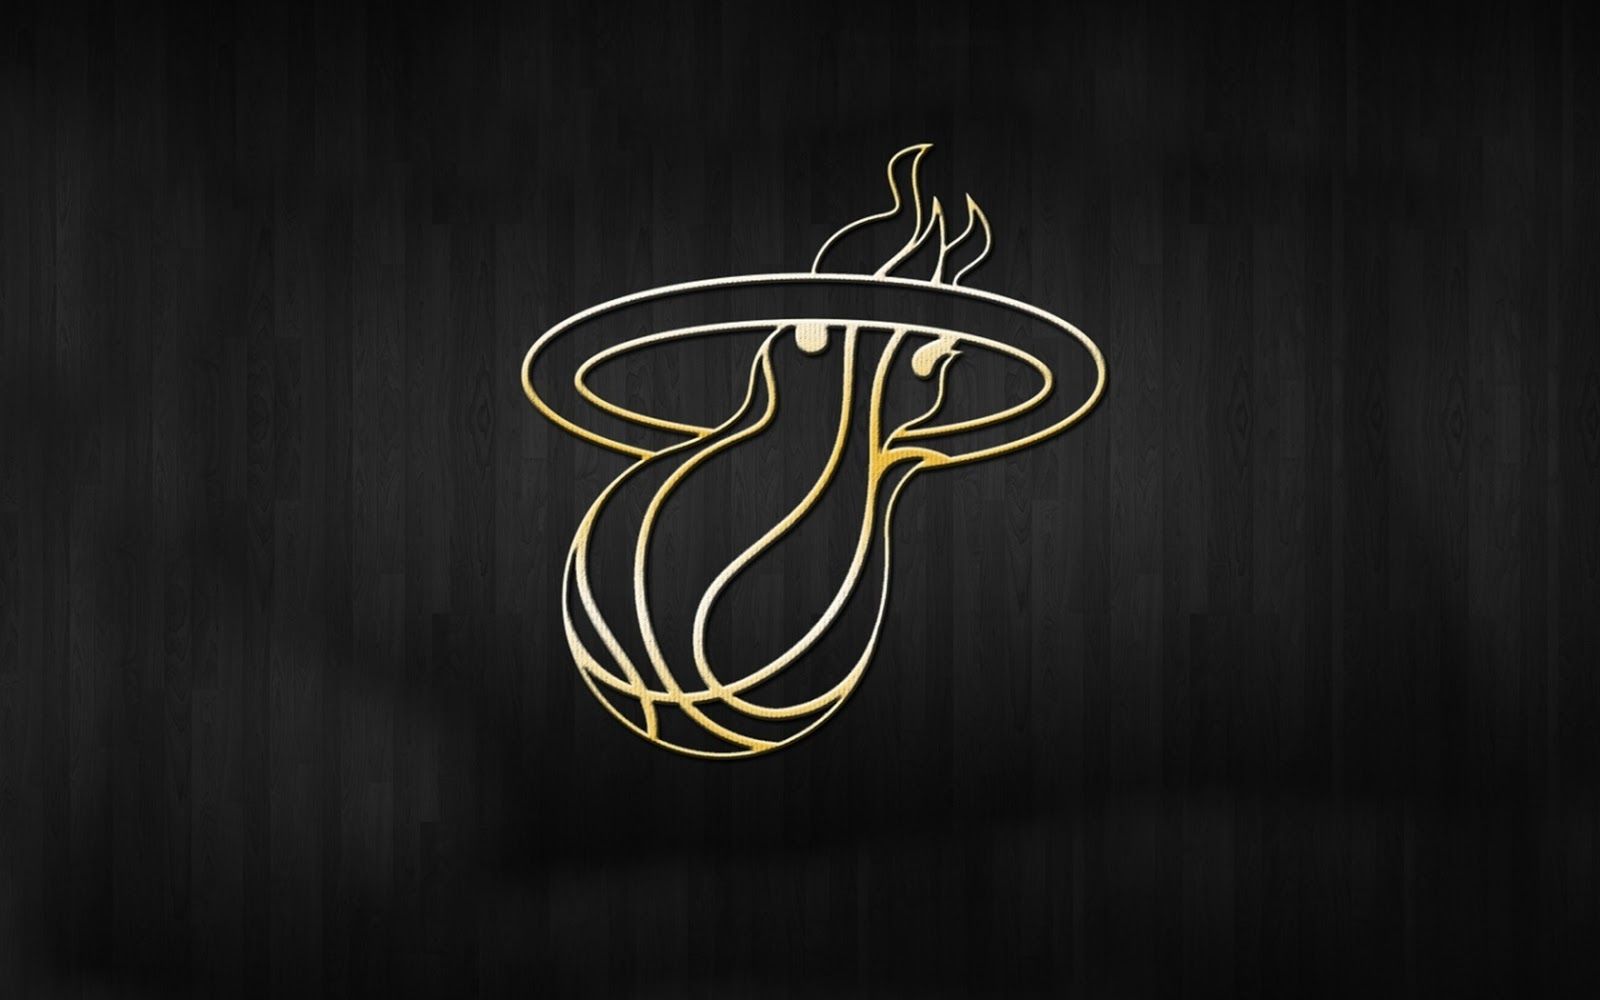 Free download miami heat logo 2014 wallpaper basketball Desktop